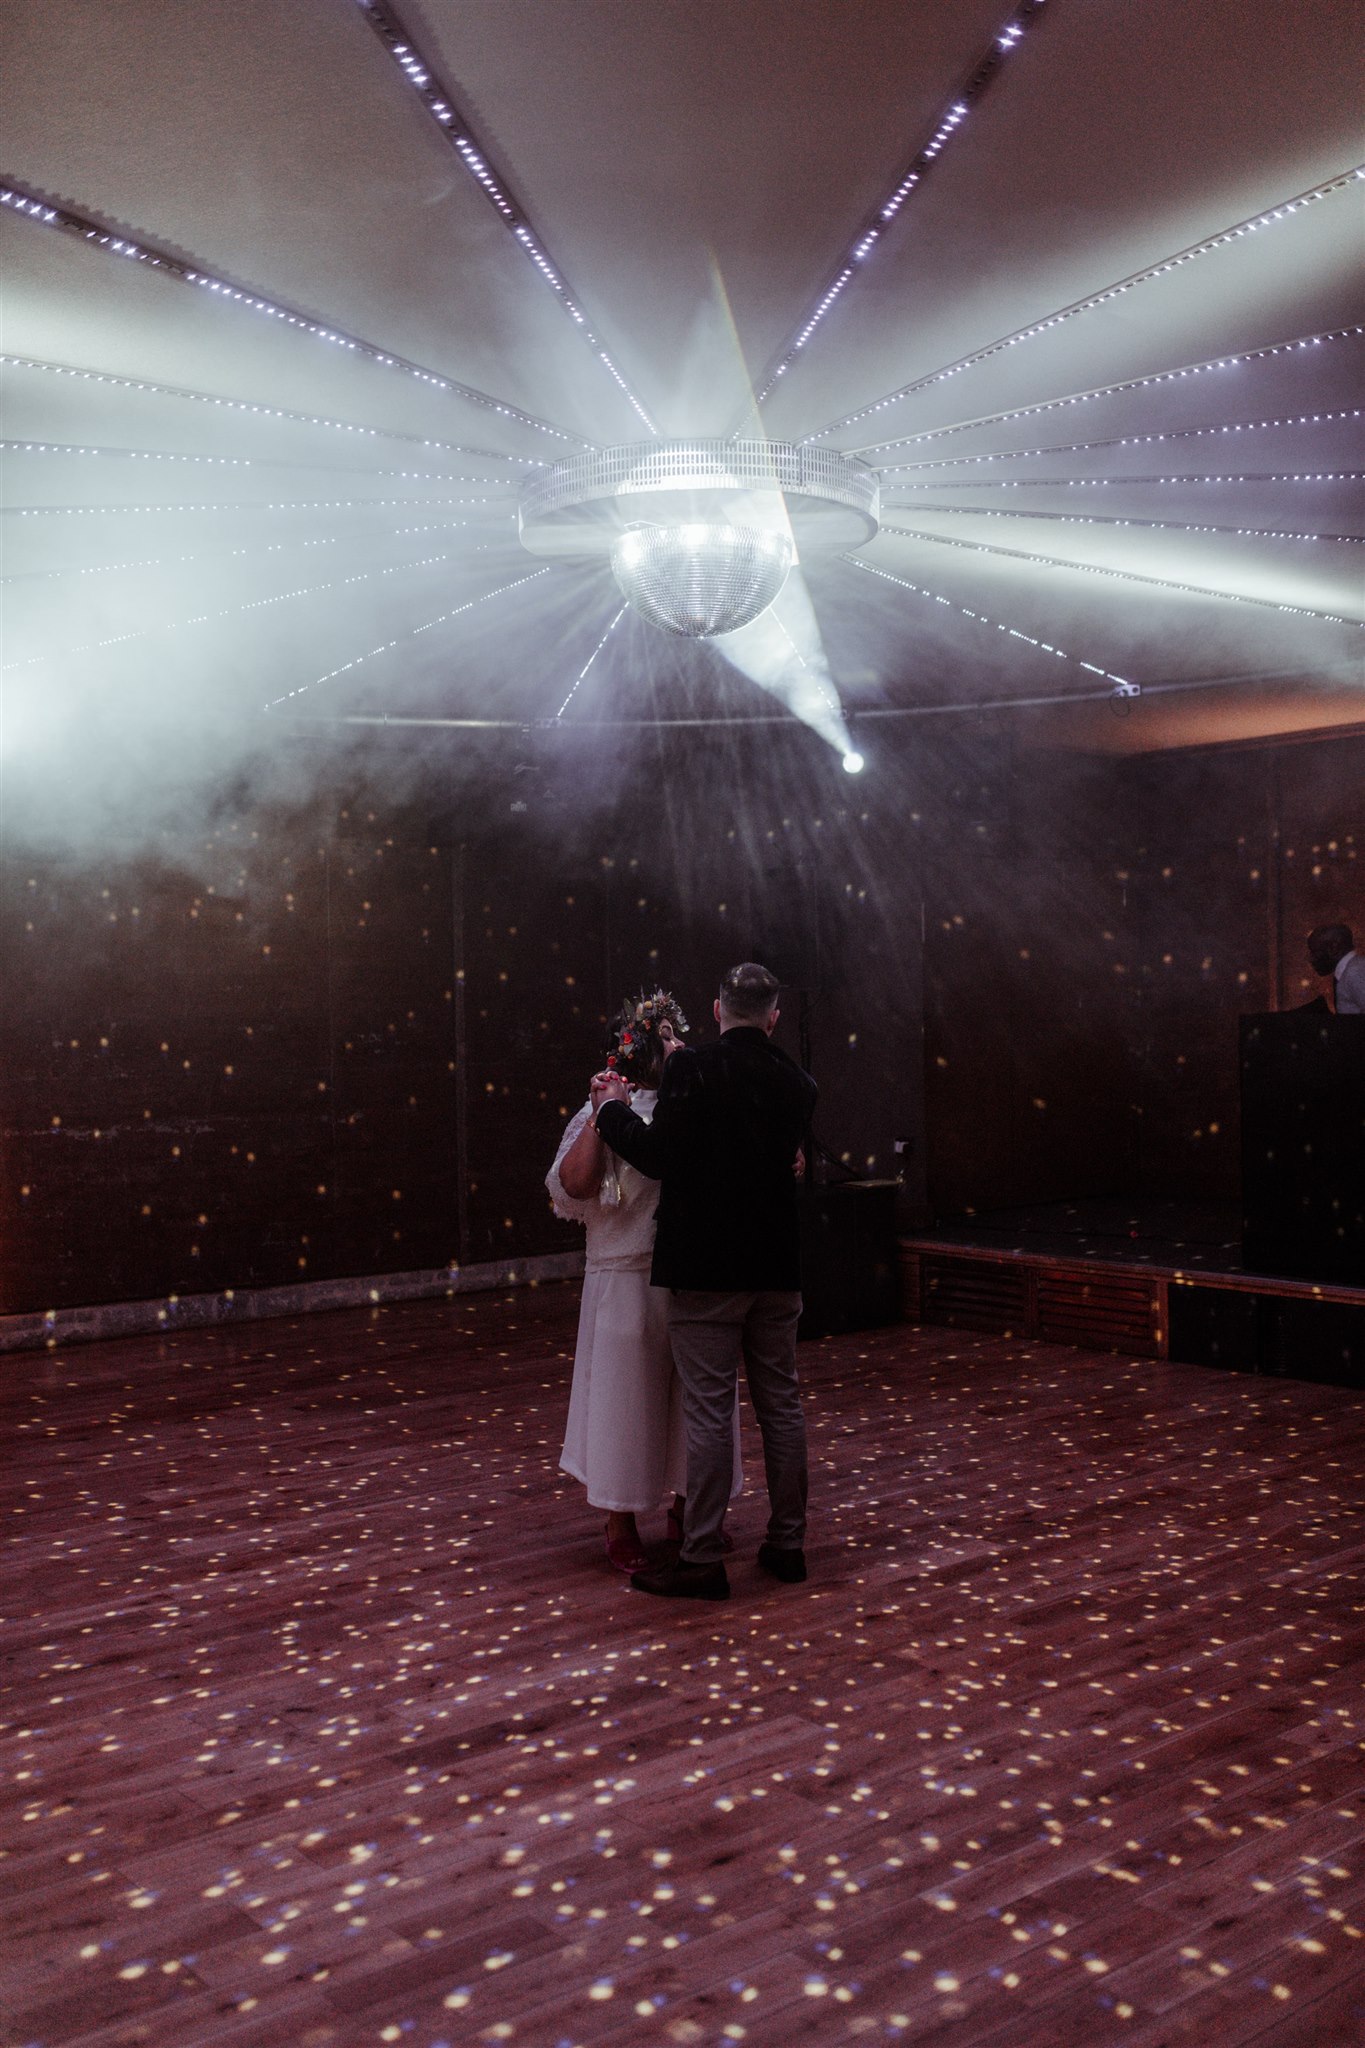 Elmore court wedding photography modern romantic documentary glasgow photographer